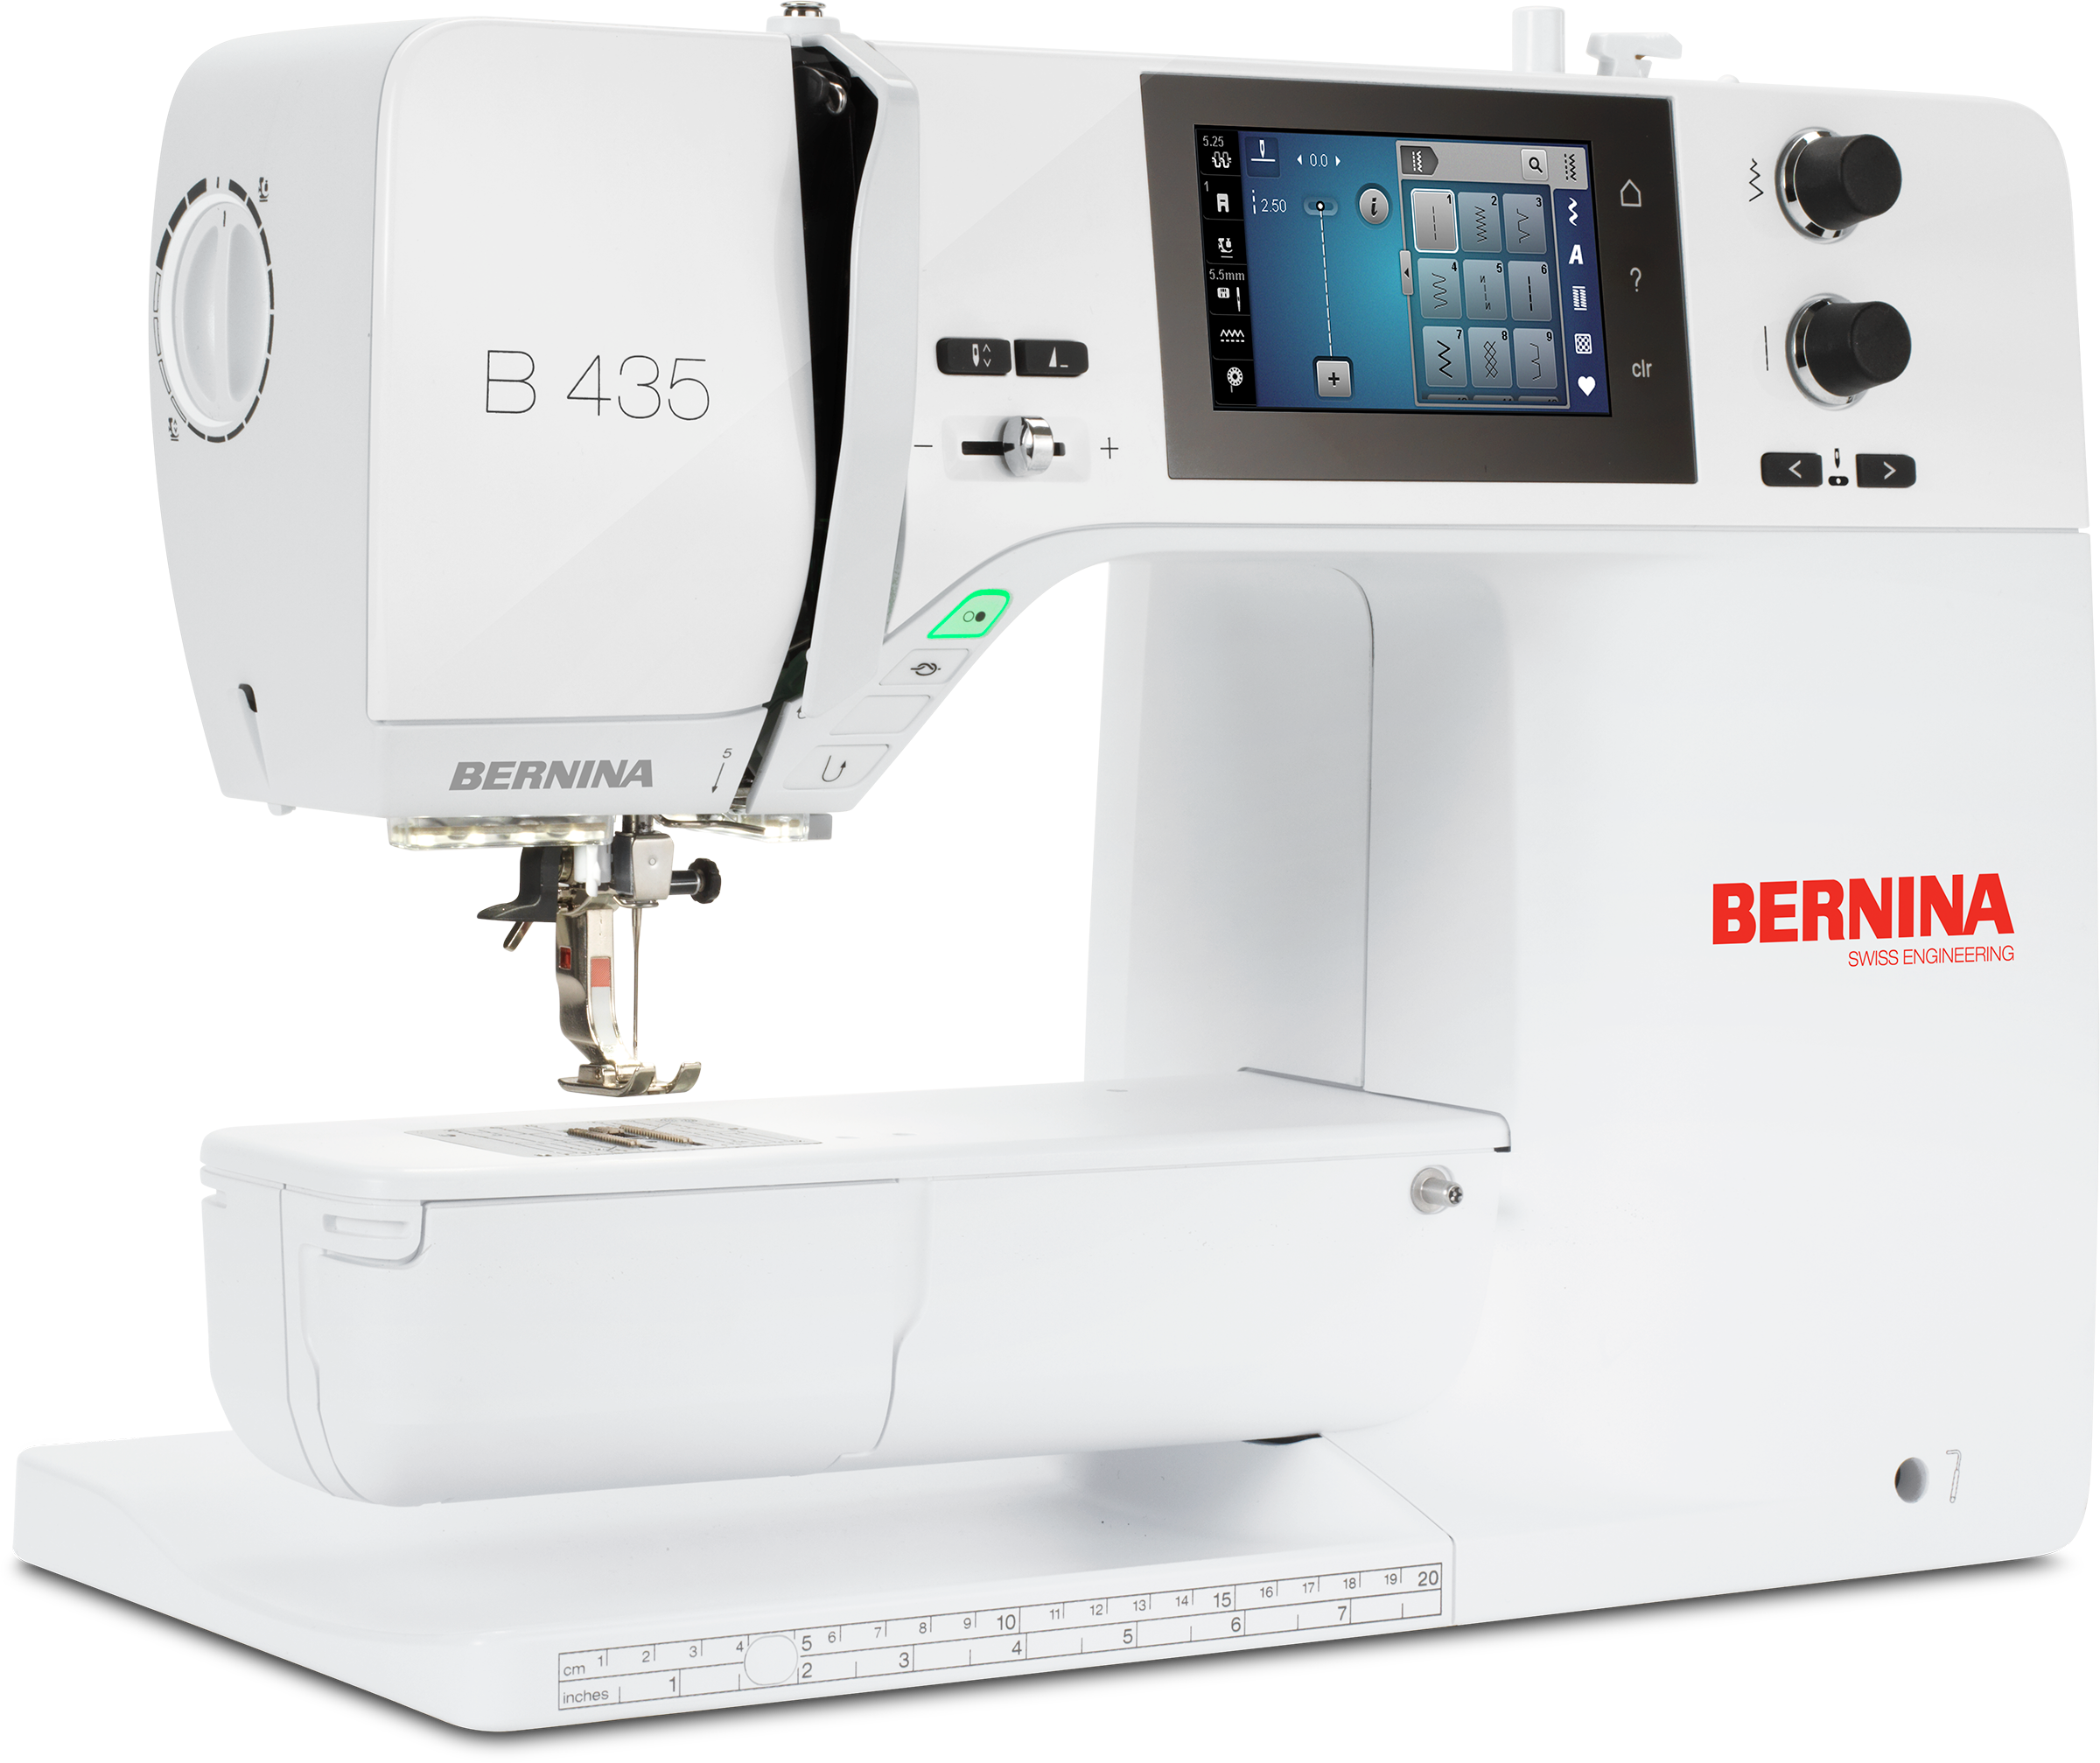 angled image of the BERNINA 435 Sewing Machine